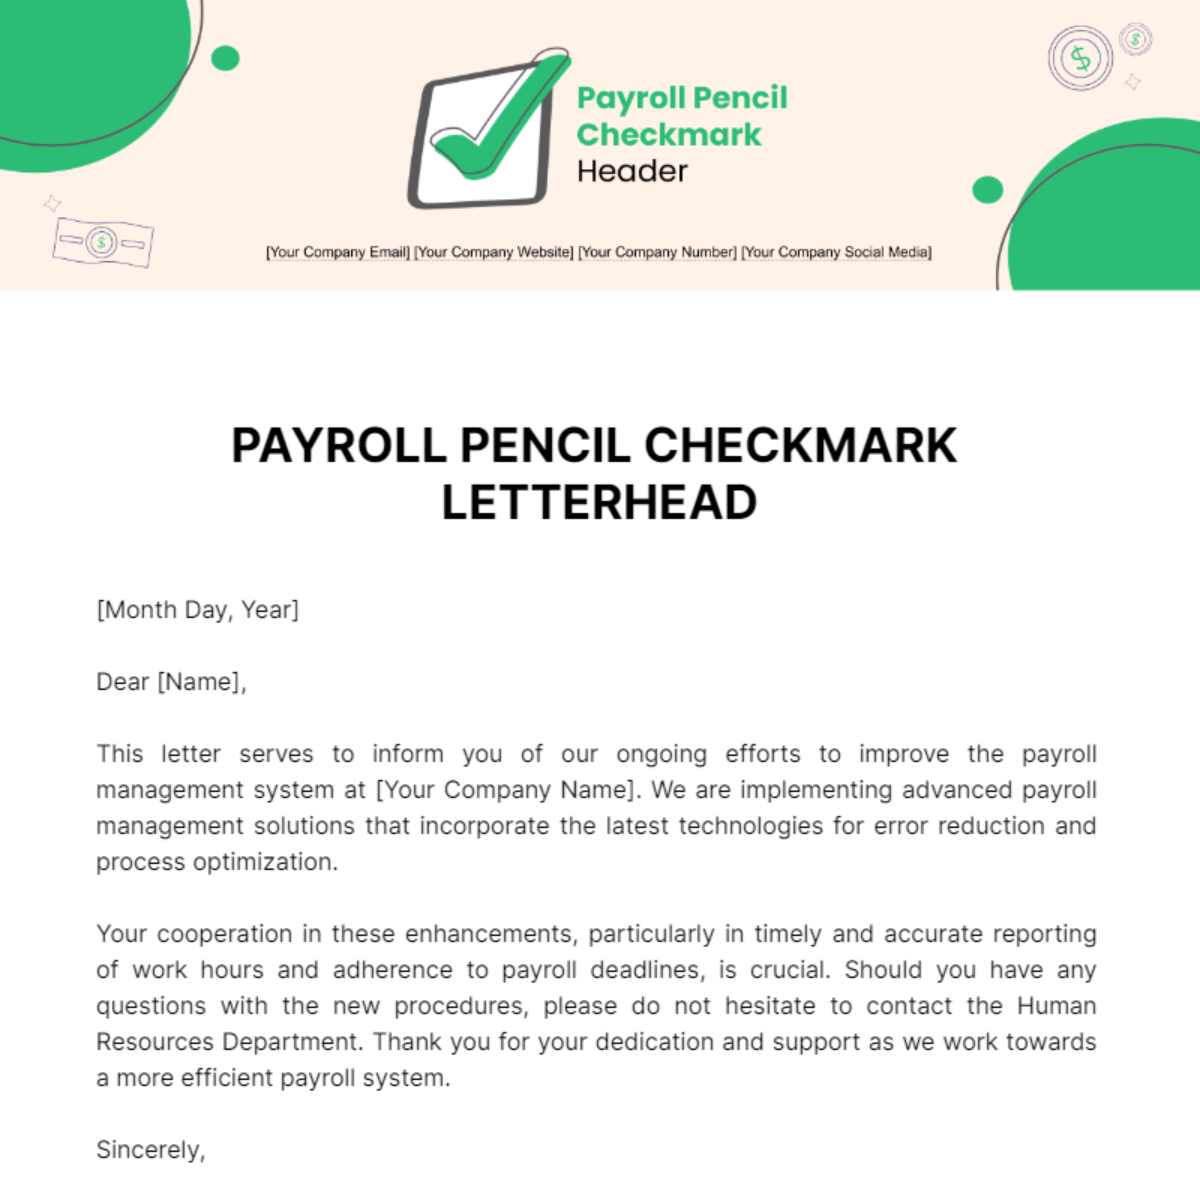 Payroll Pencil Checkmark Letterhead Template